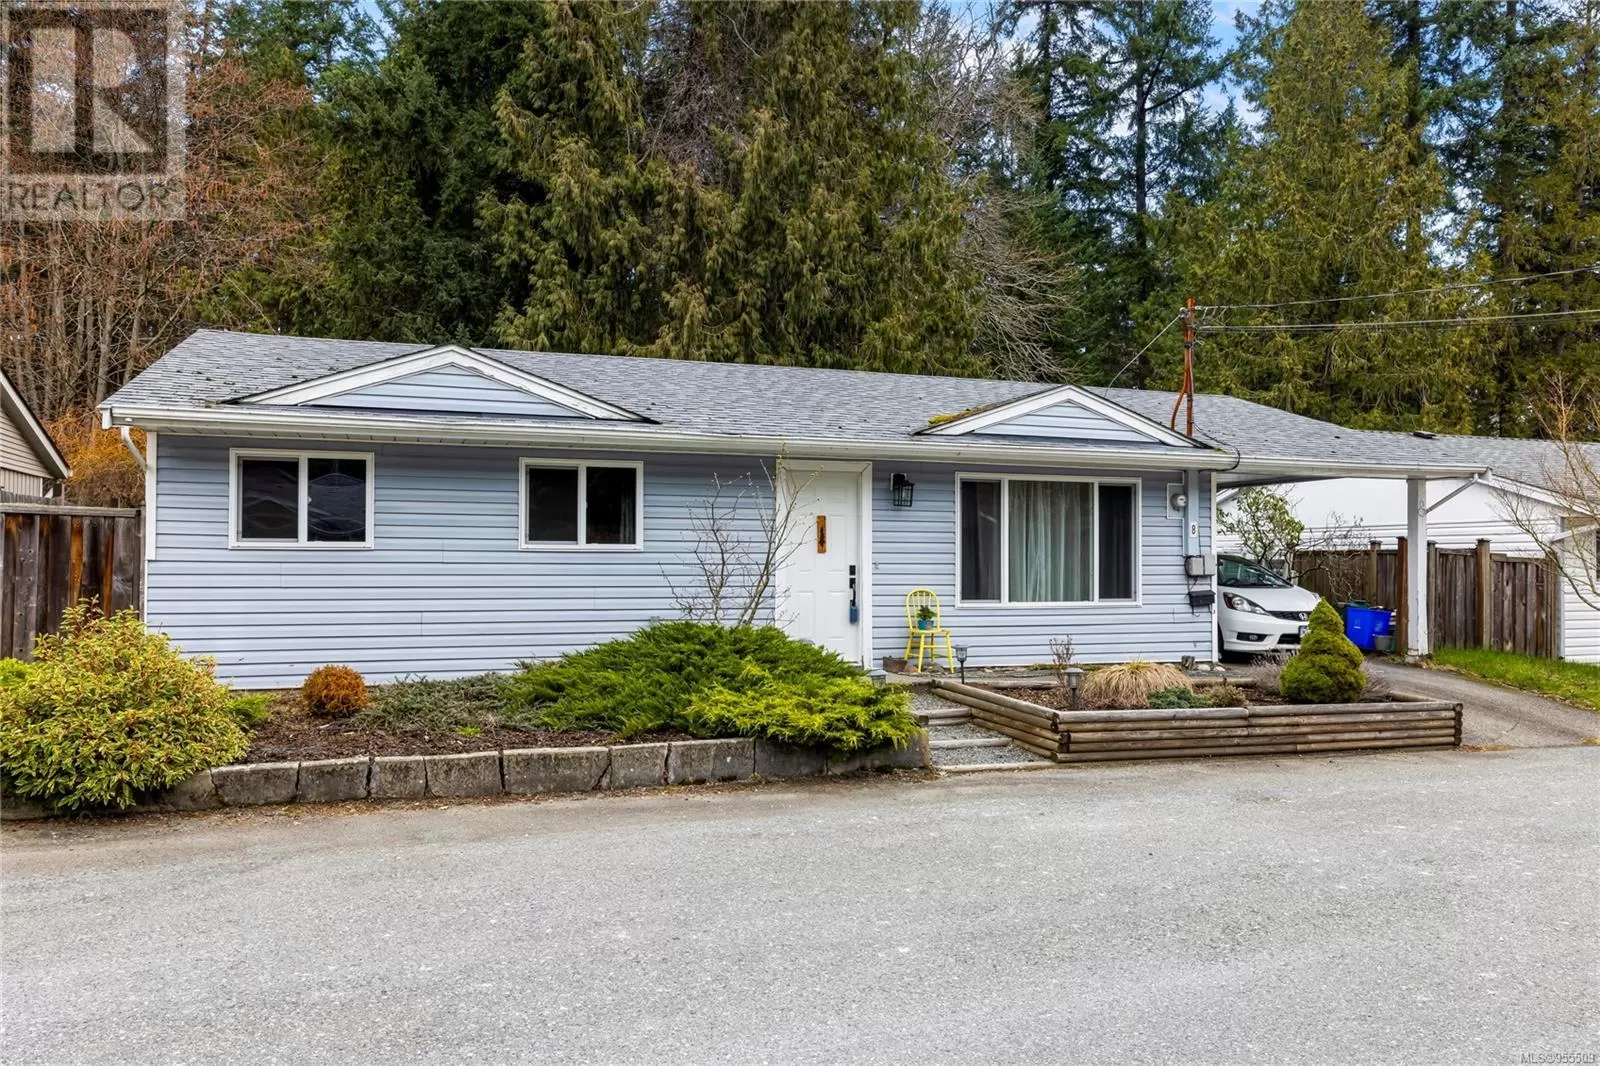 House for rent: 8 4604 Hammond Bay Rd, Nanaimo, British Columbia V9T 5B1